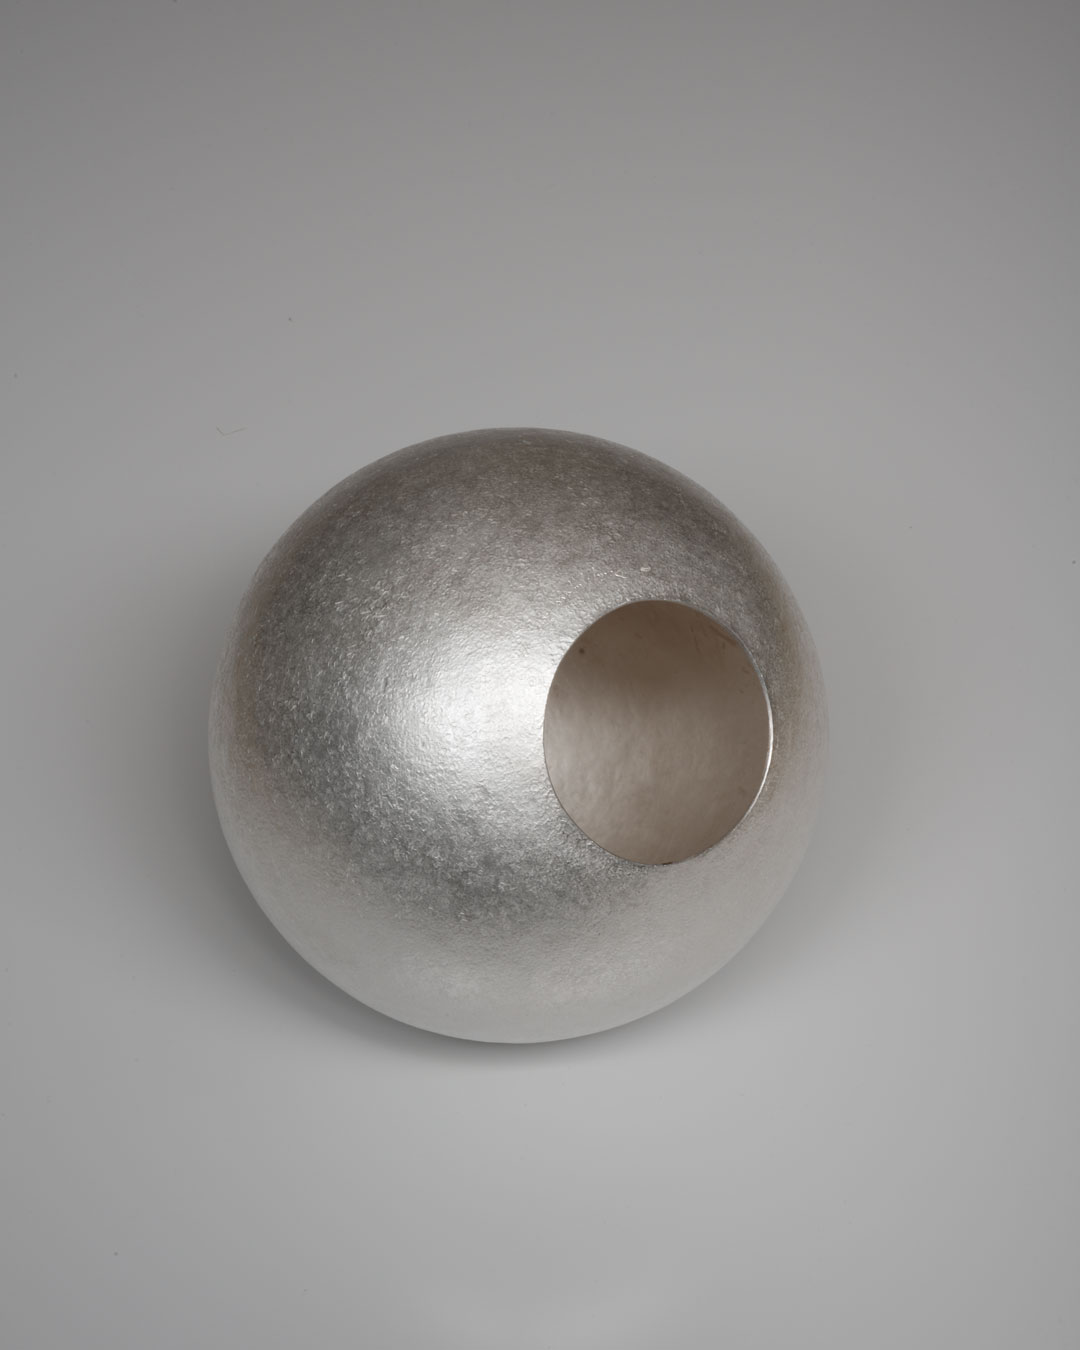 David Huycke, White Moon, 2012, object; silver 925/1000 - 723 gram, 165 x 165 x 165 mm, €4500 (image 2 of 2)